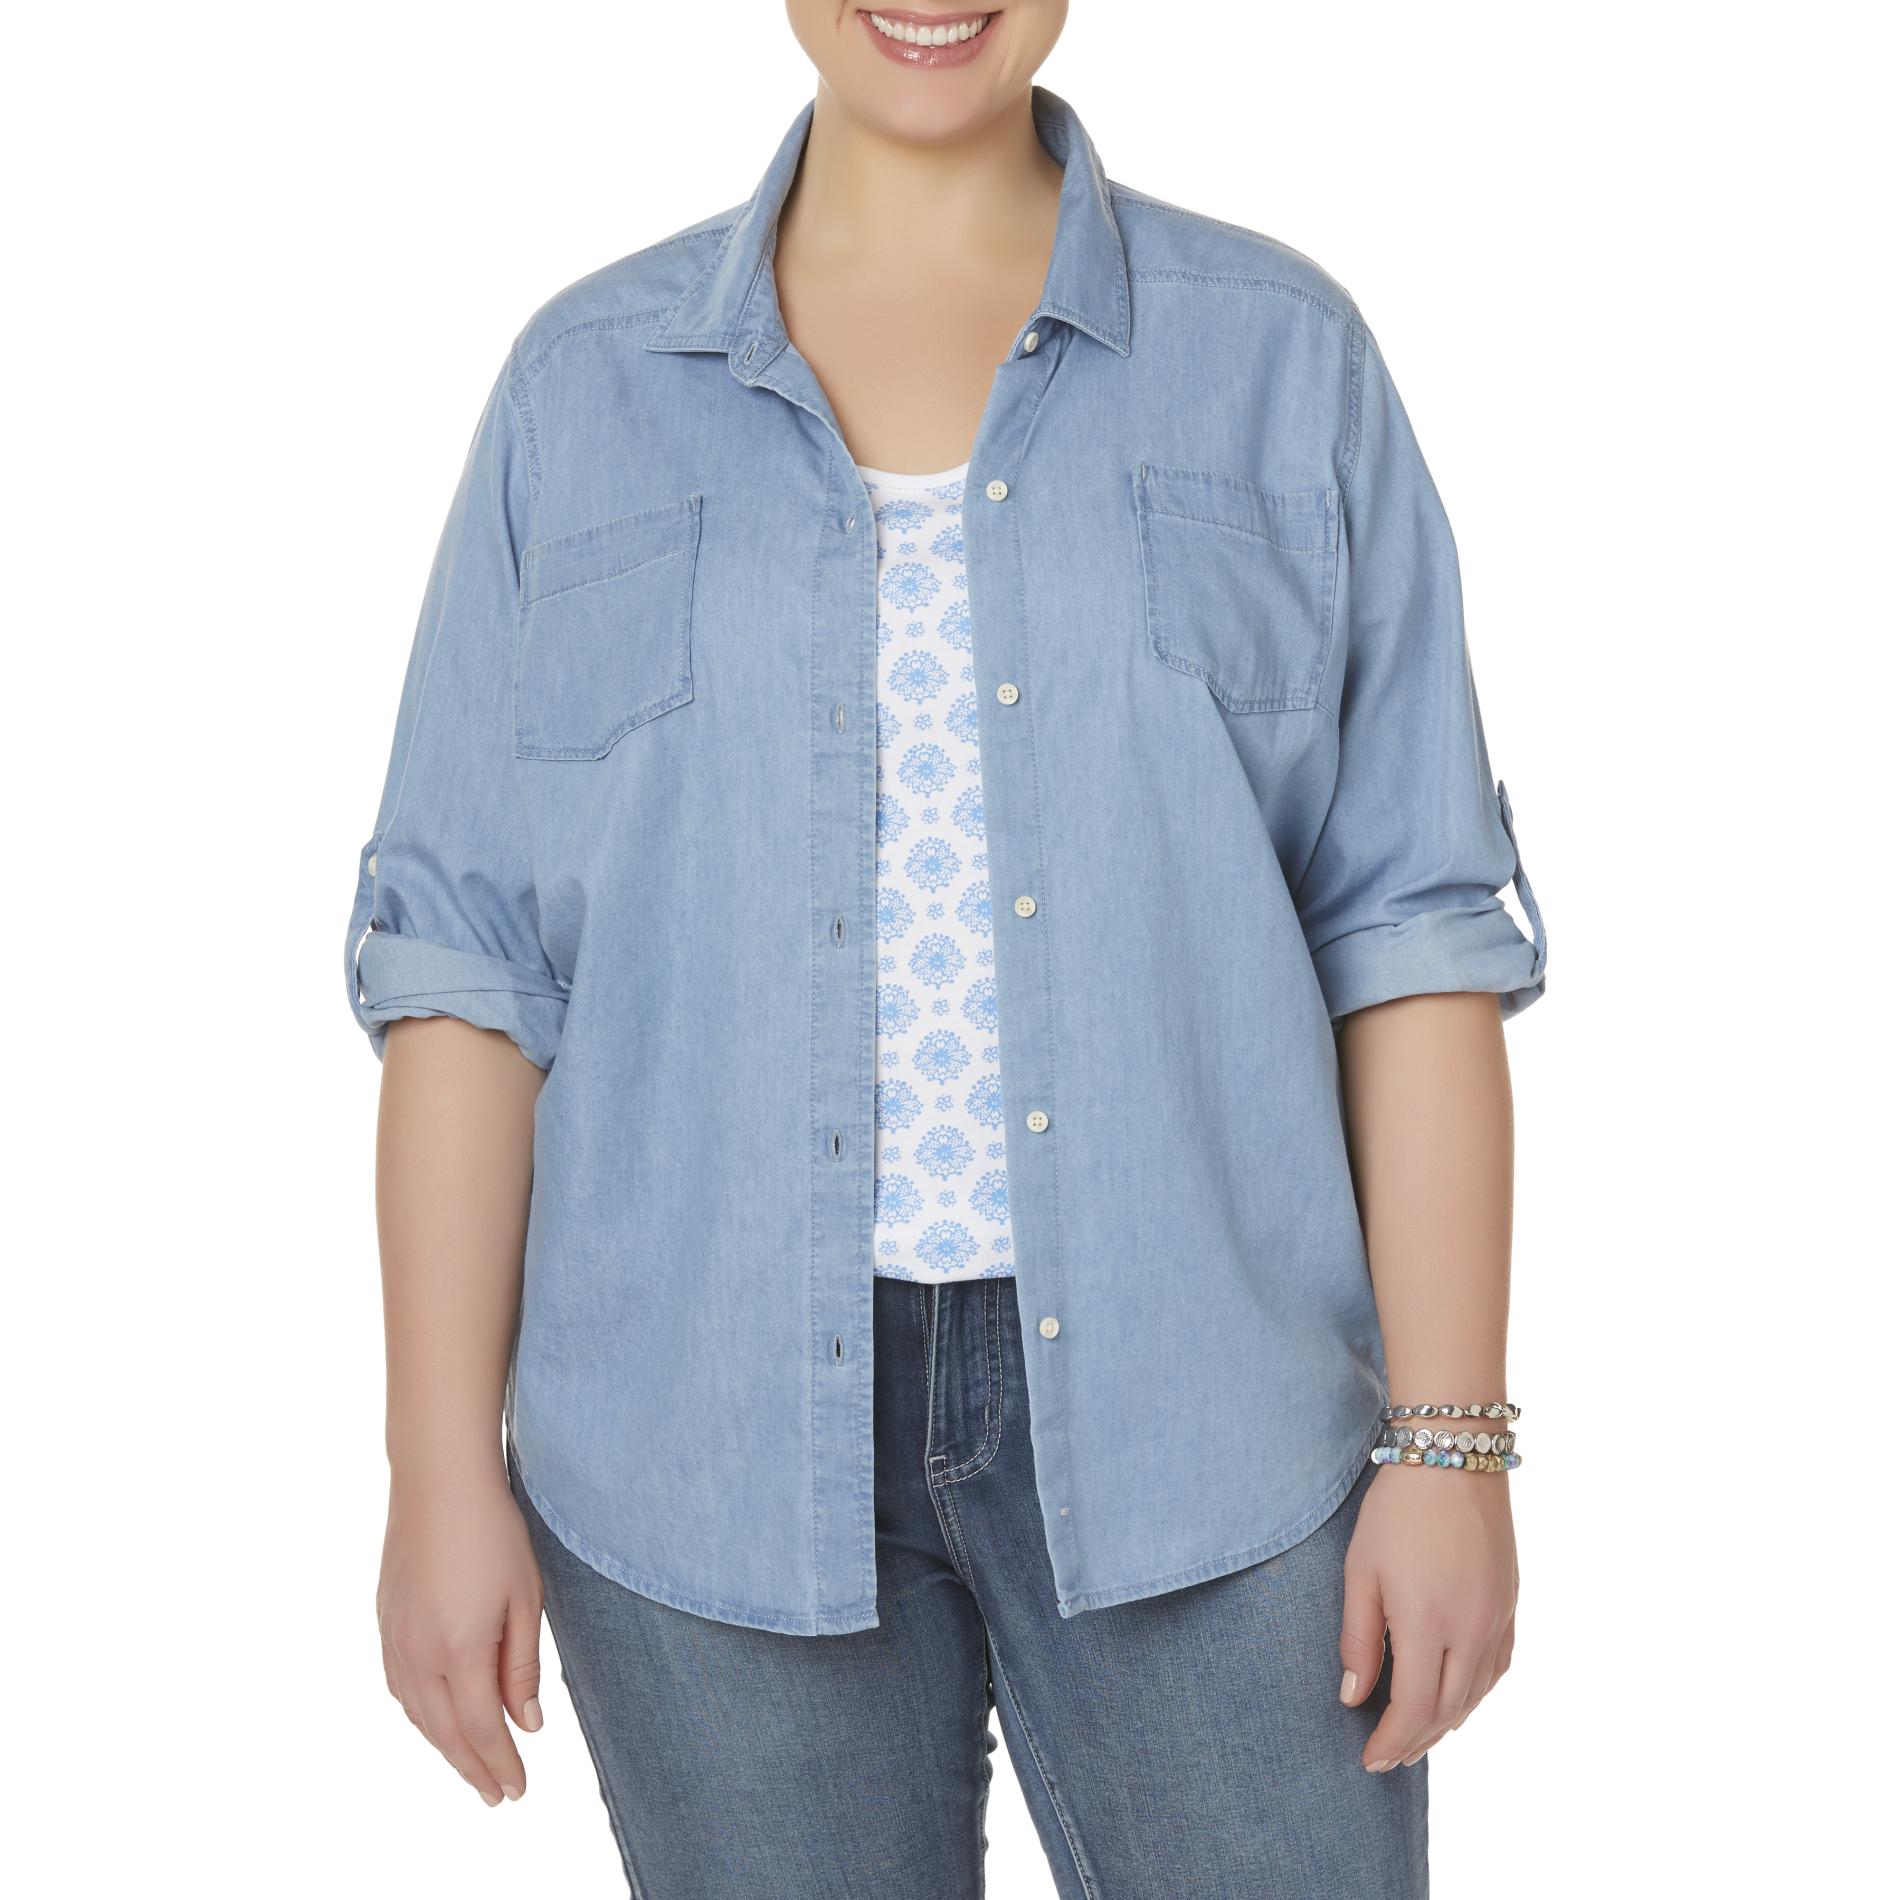 Simply Emma Women's Plus Button-Front Shirt